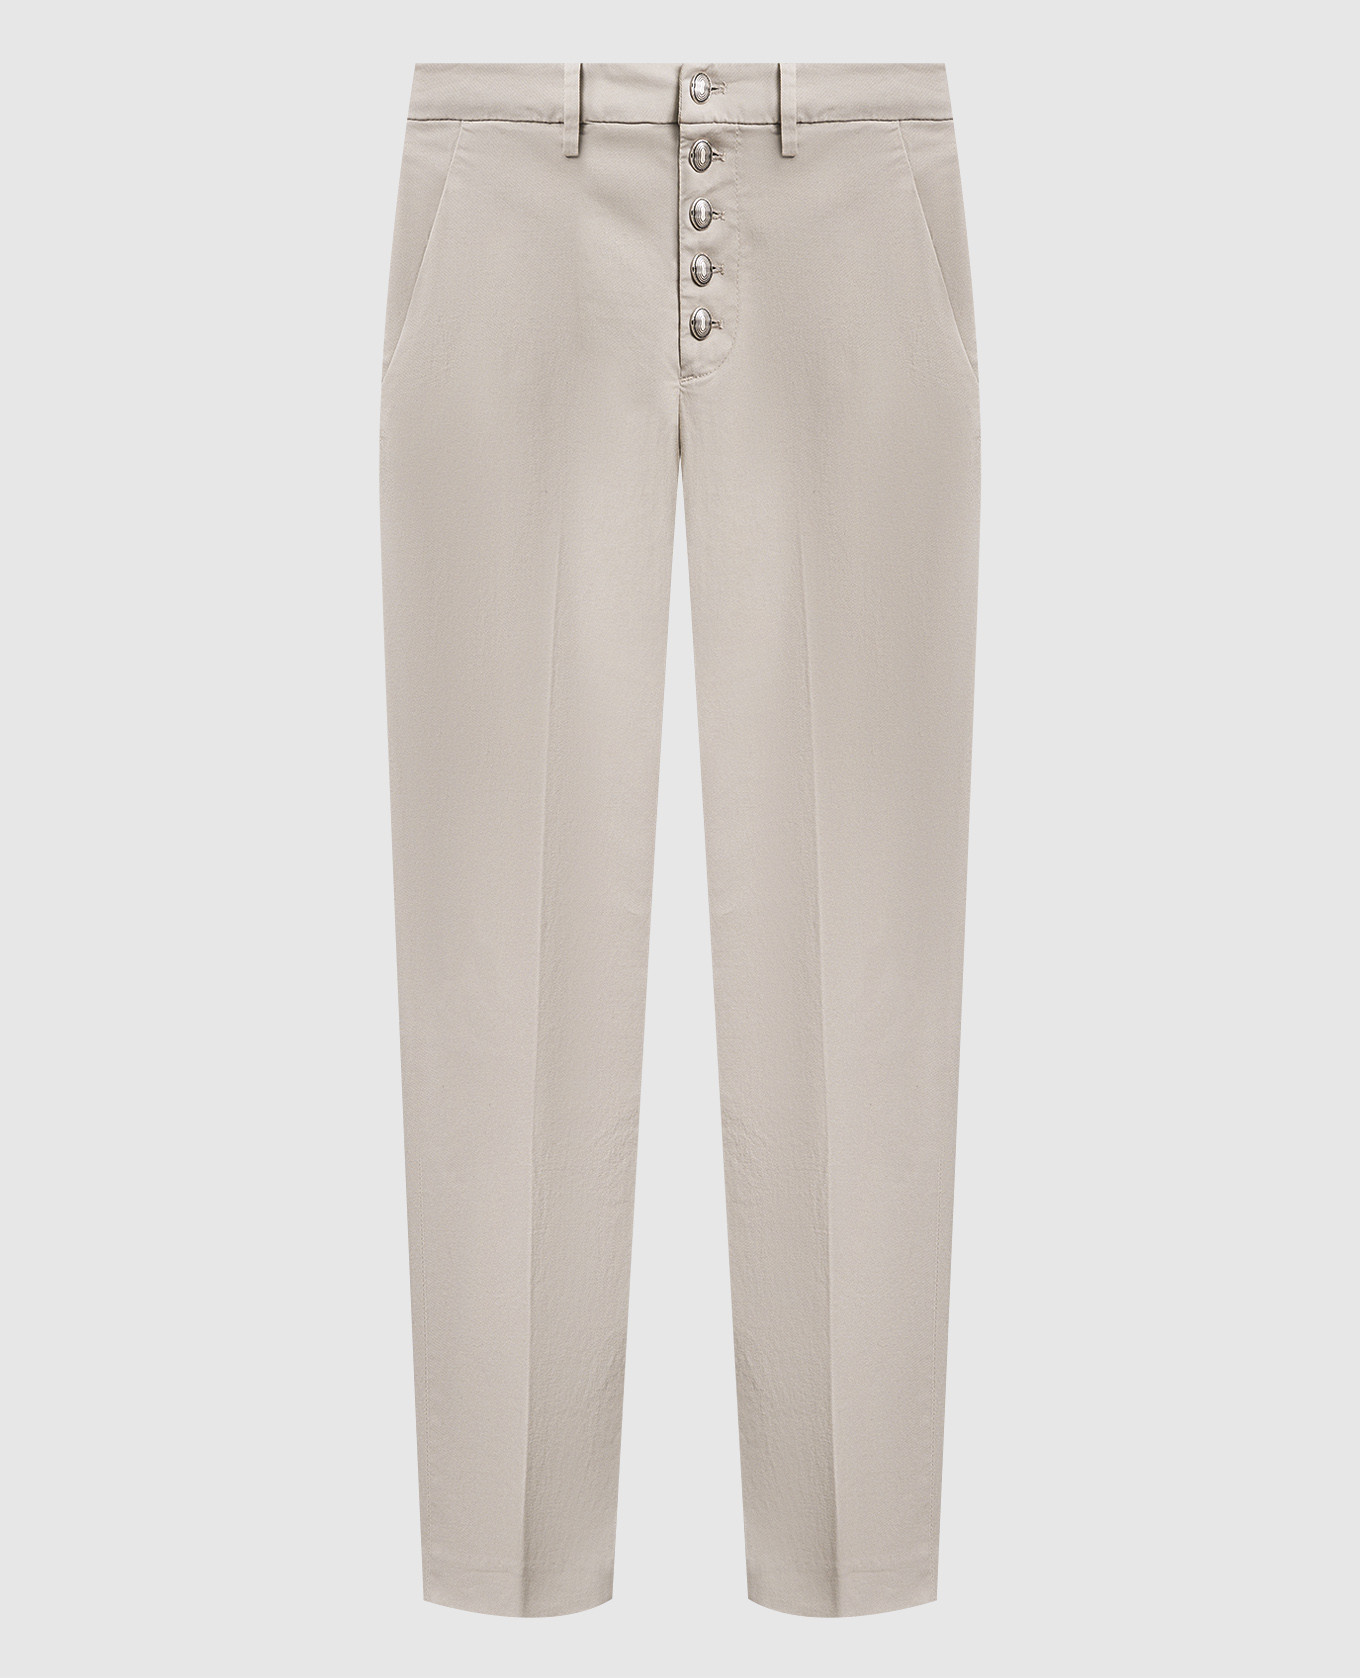 Light gray trousers